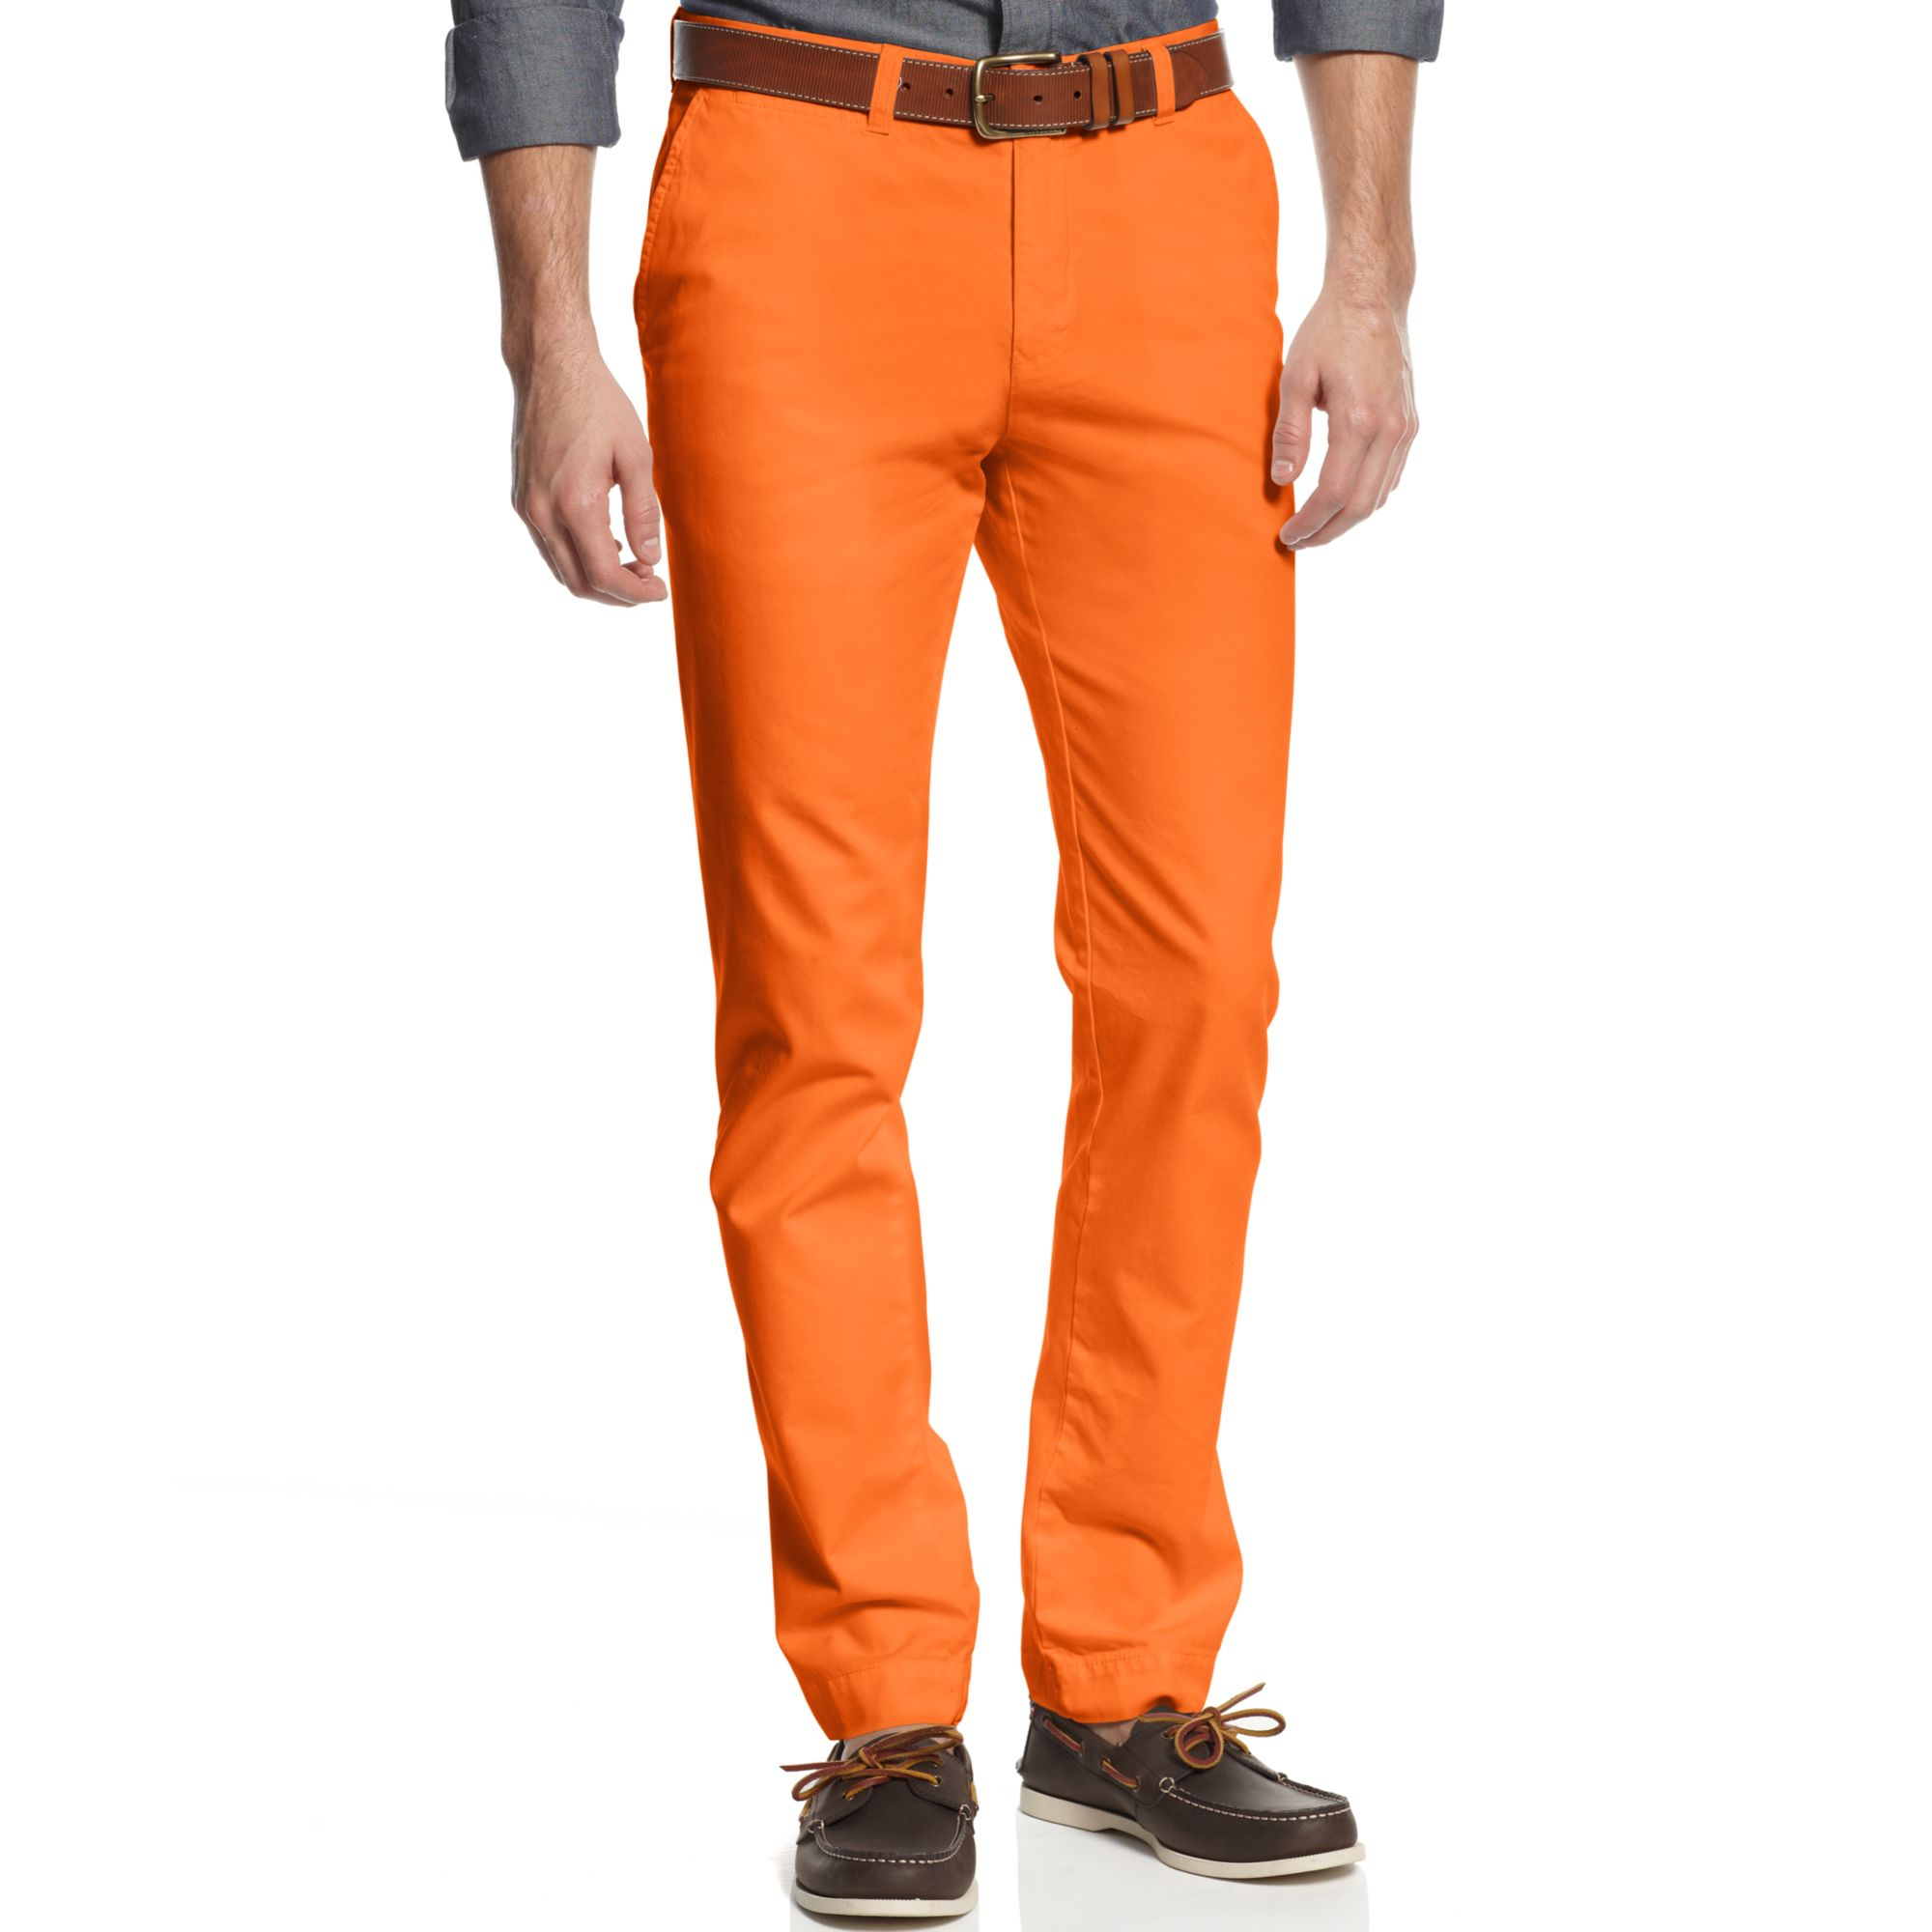 Tommy Hilfiger Slim Fit Graduate Chino Pants in Orange for Men - Lyst